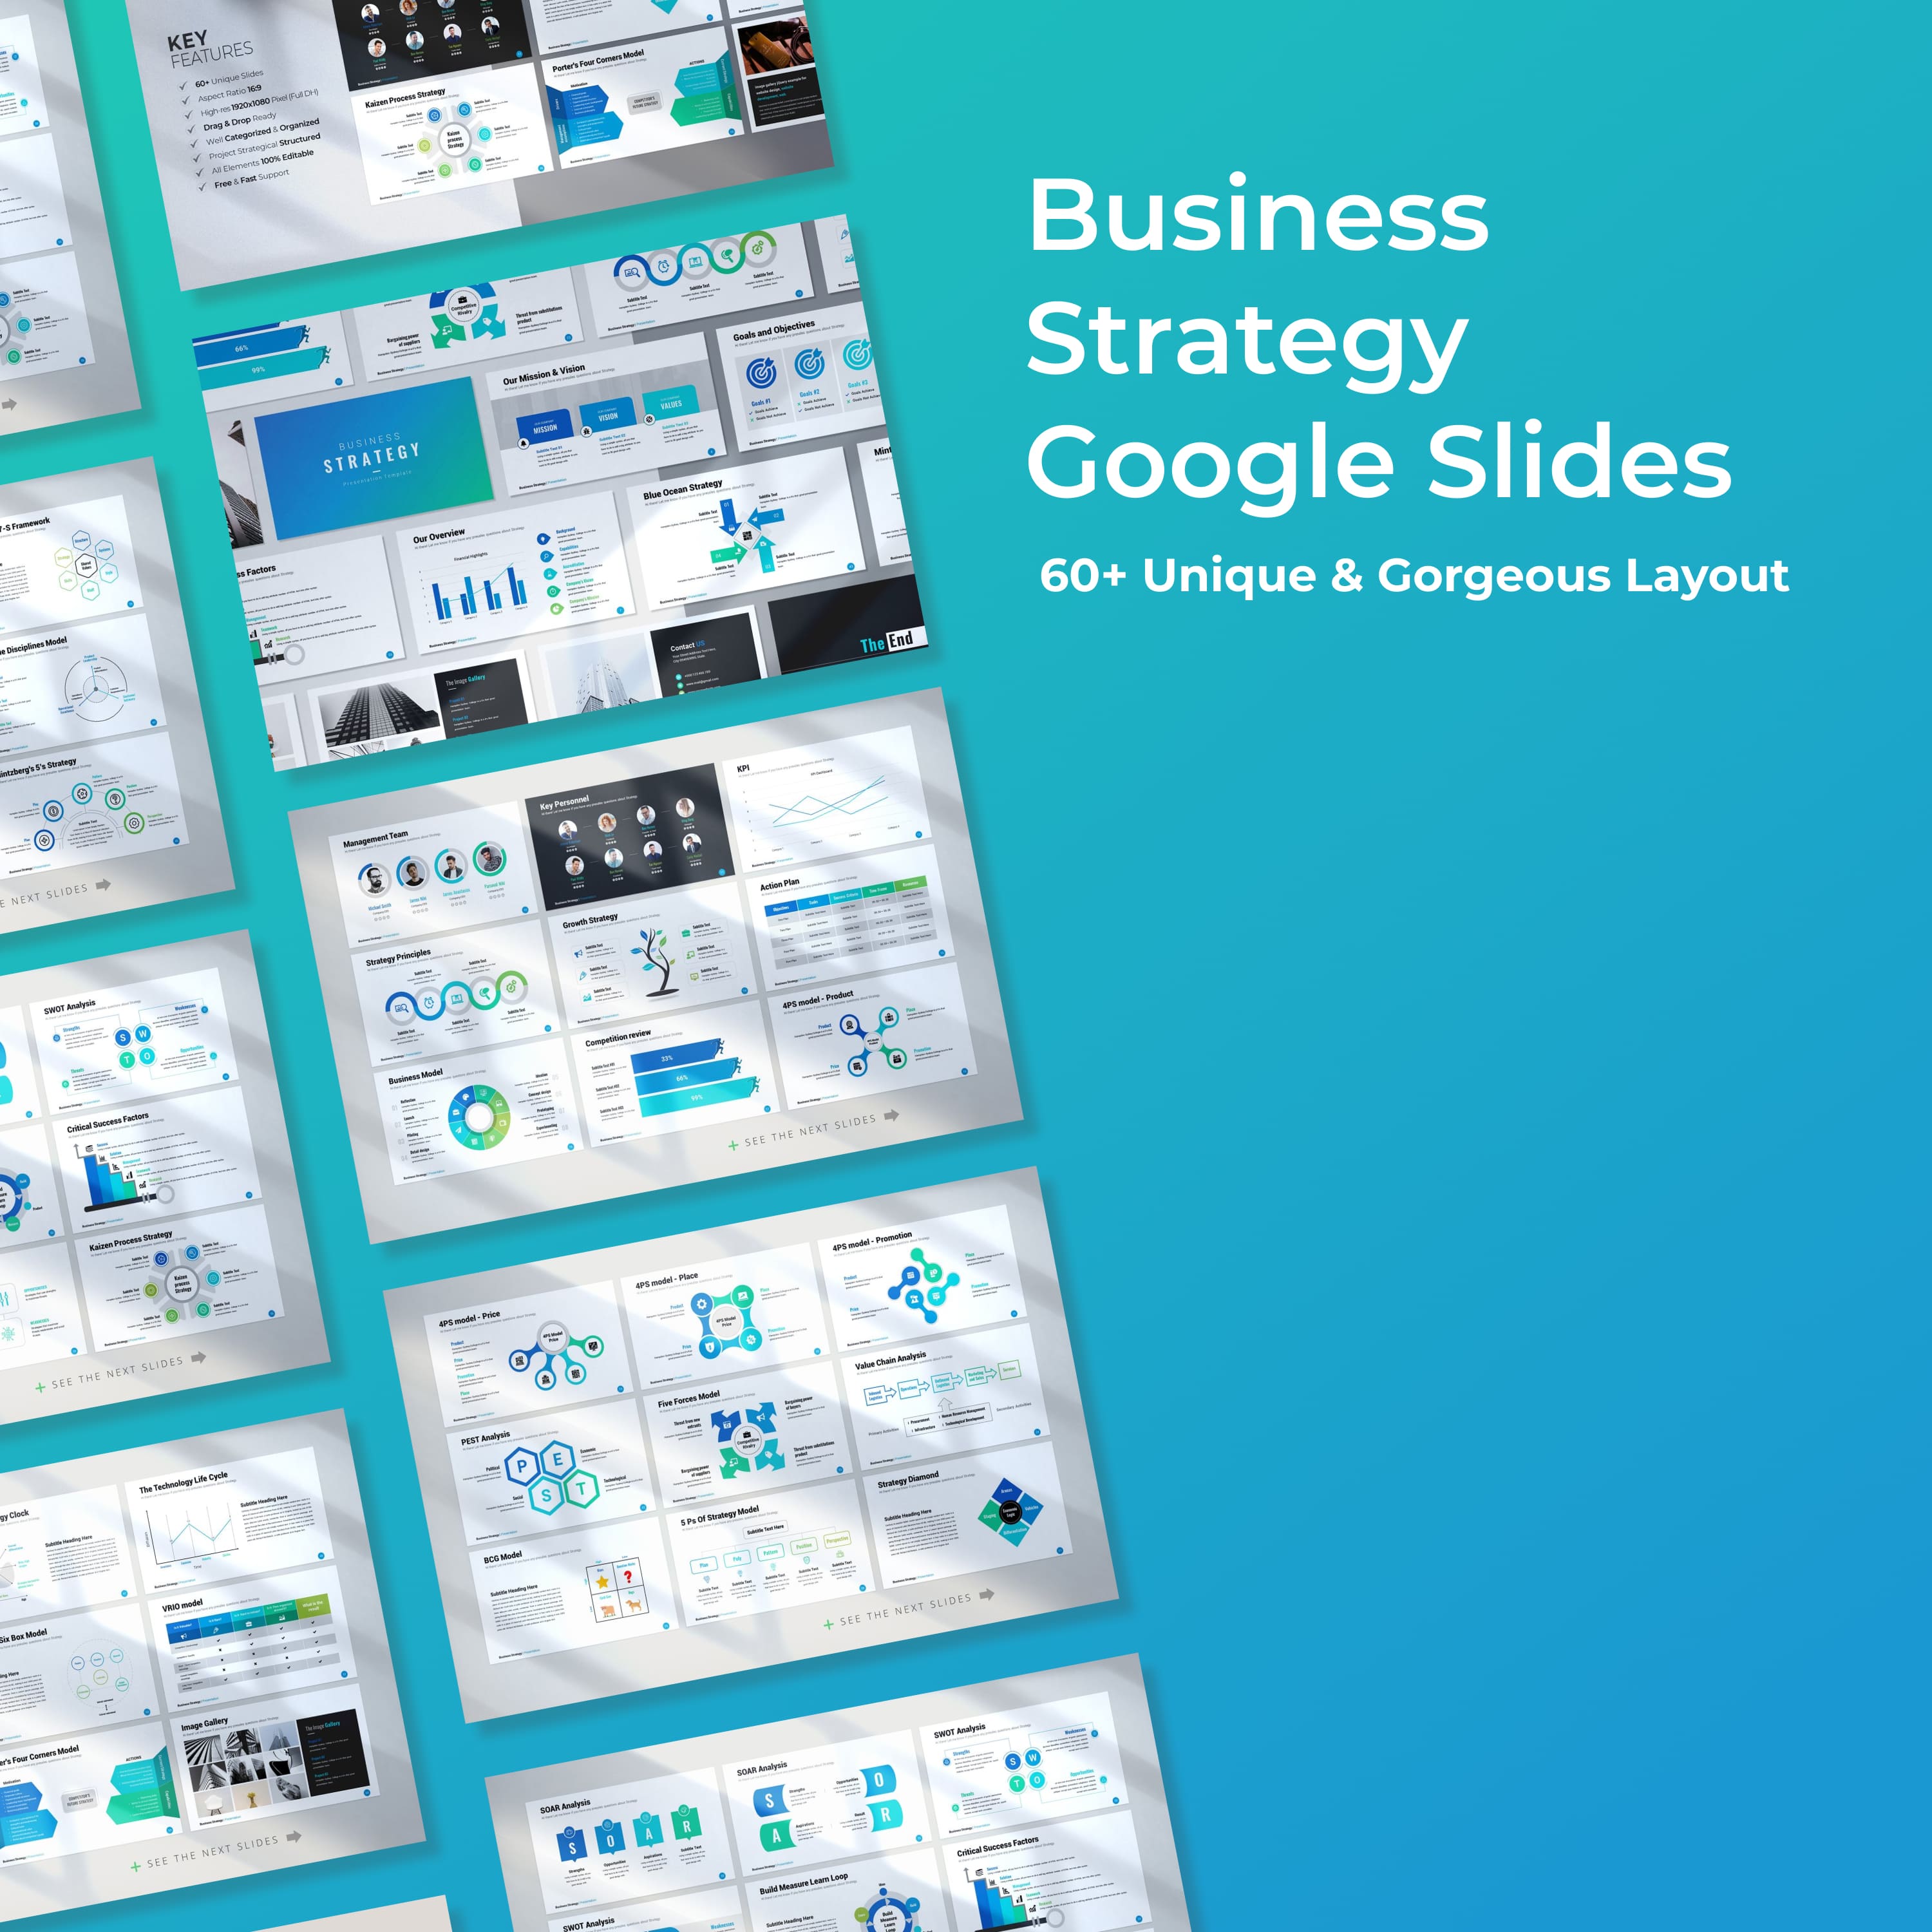 Business Strategy Google Slides.